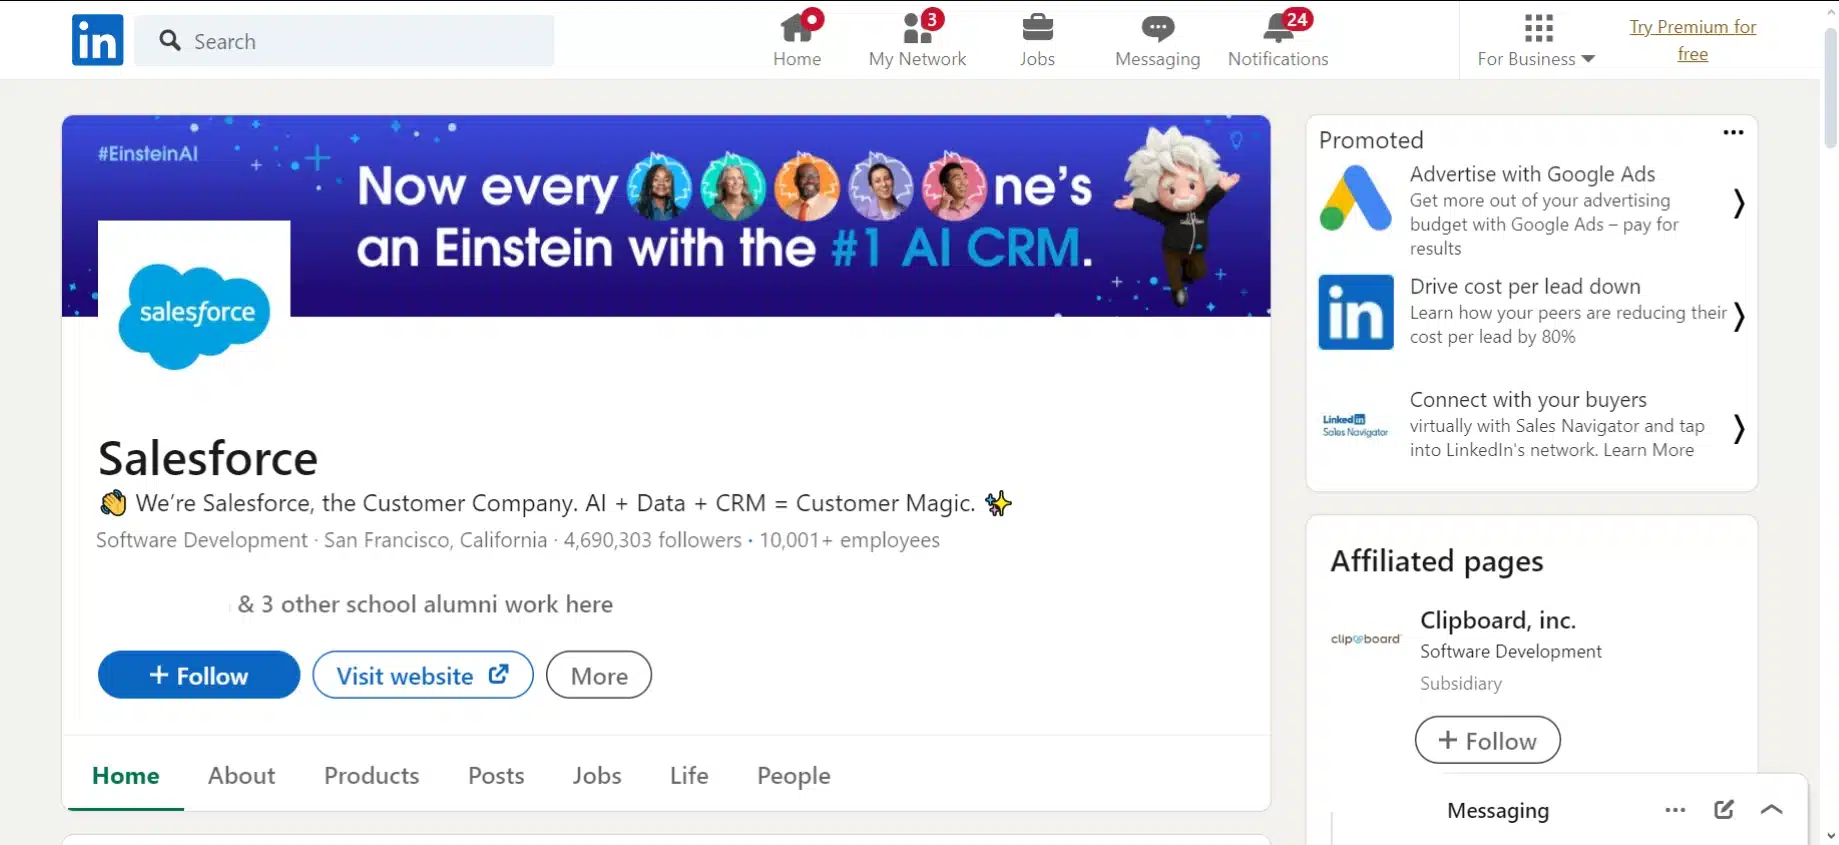 Salesforce LinkedIn Company Page